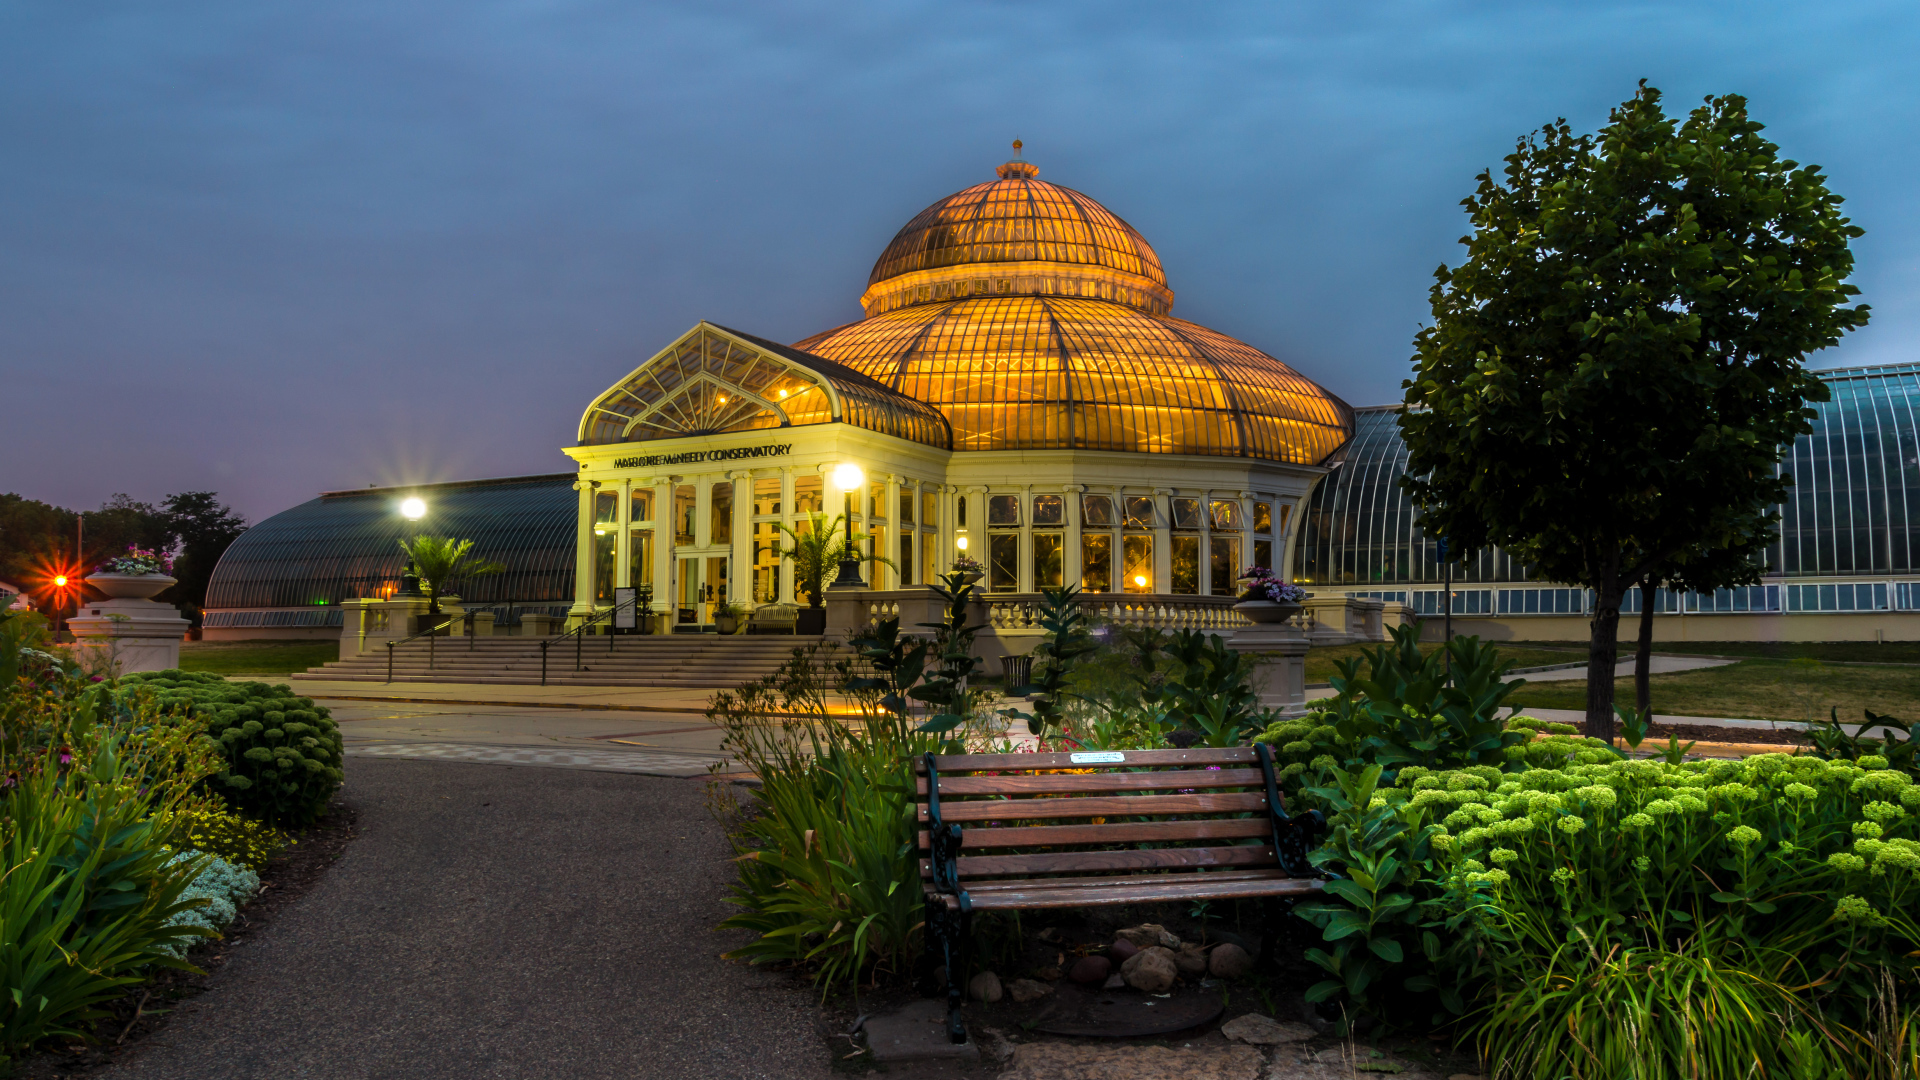 The Marjorie McNeely Conservatory Botanical Garden, Minnesota. USA